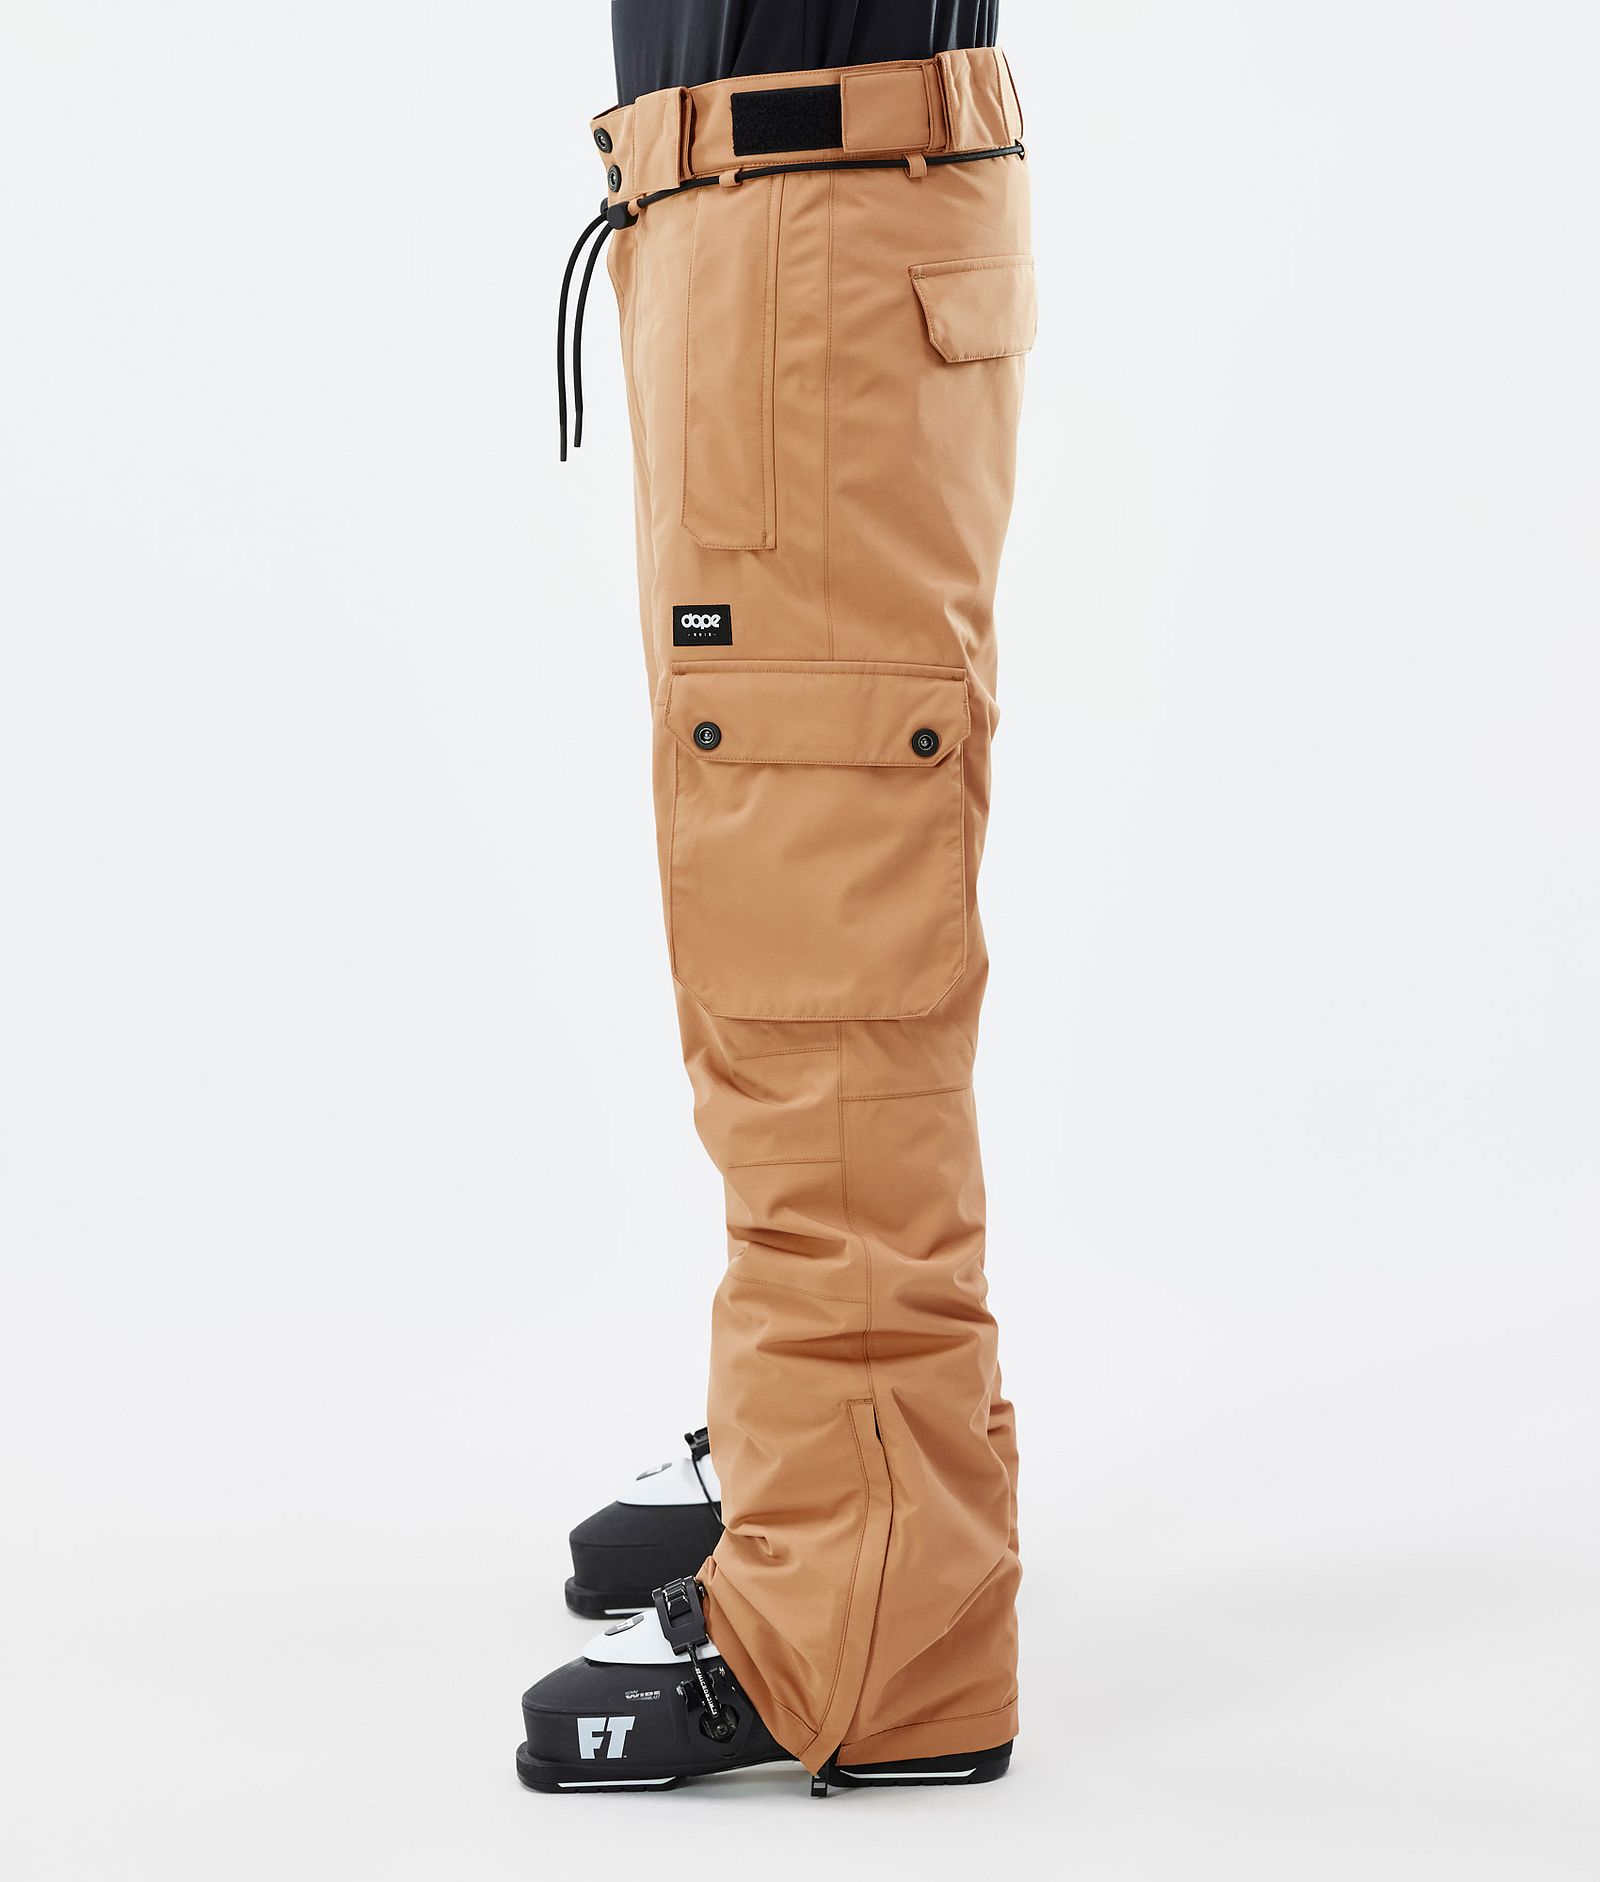 Iconic Pantalon de Ski Homme Khaki Yellow, Image 2 sur 6